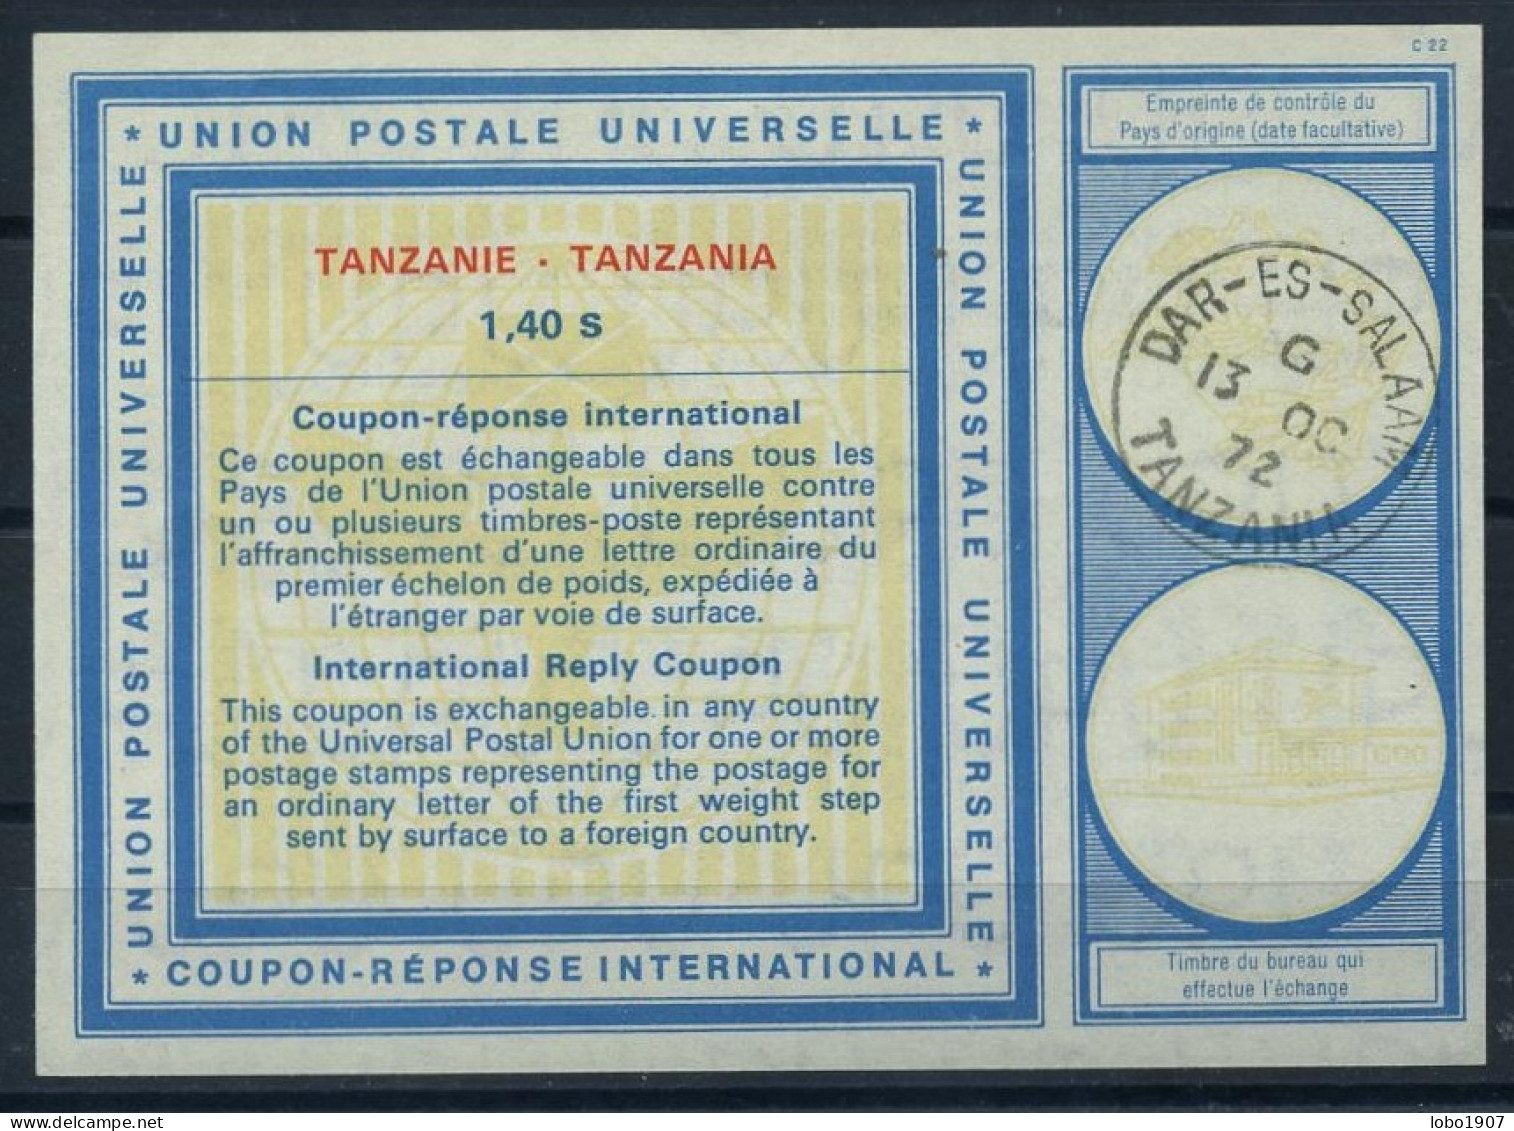 TANZANIE TANZANIA  Vi20  1,40 S  International Reply Coupon Reponse Antwortschein IRC IAS  DAR-ES-SALAAM 13.10.72 - Tanzania (1964-...)